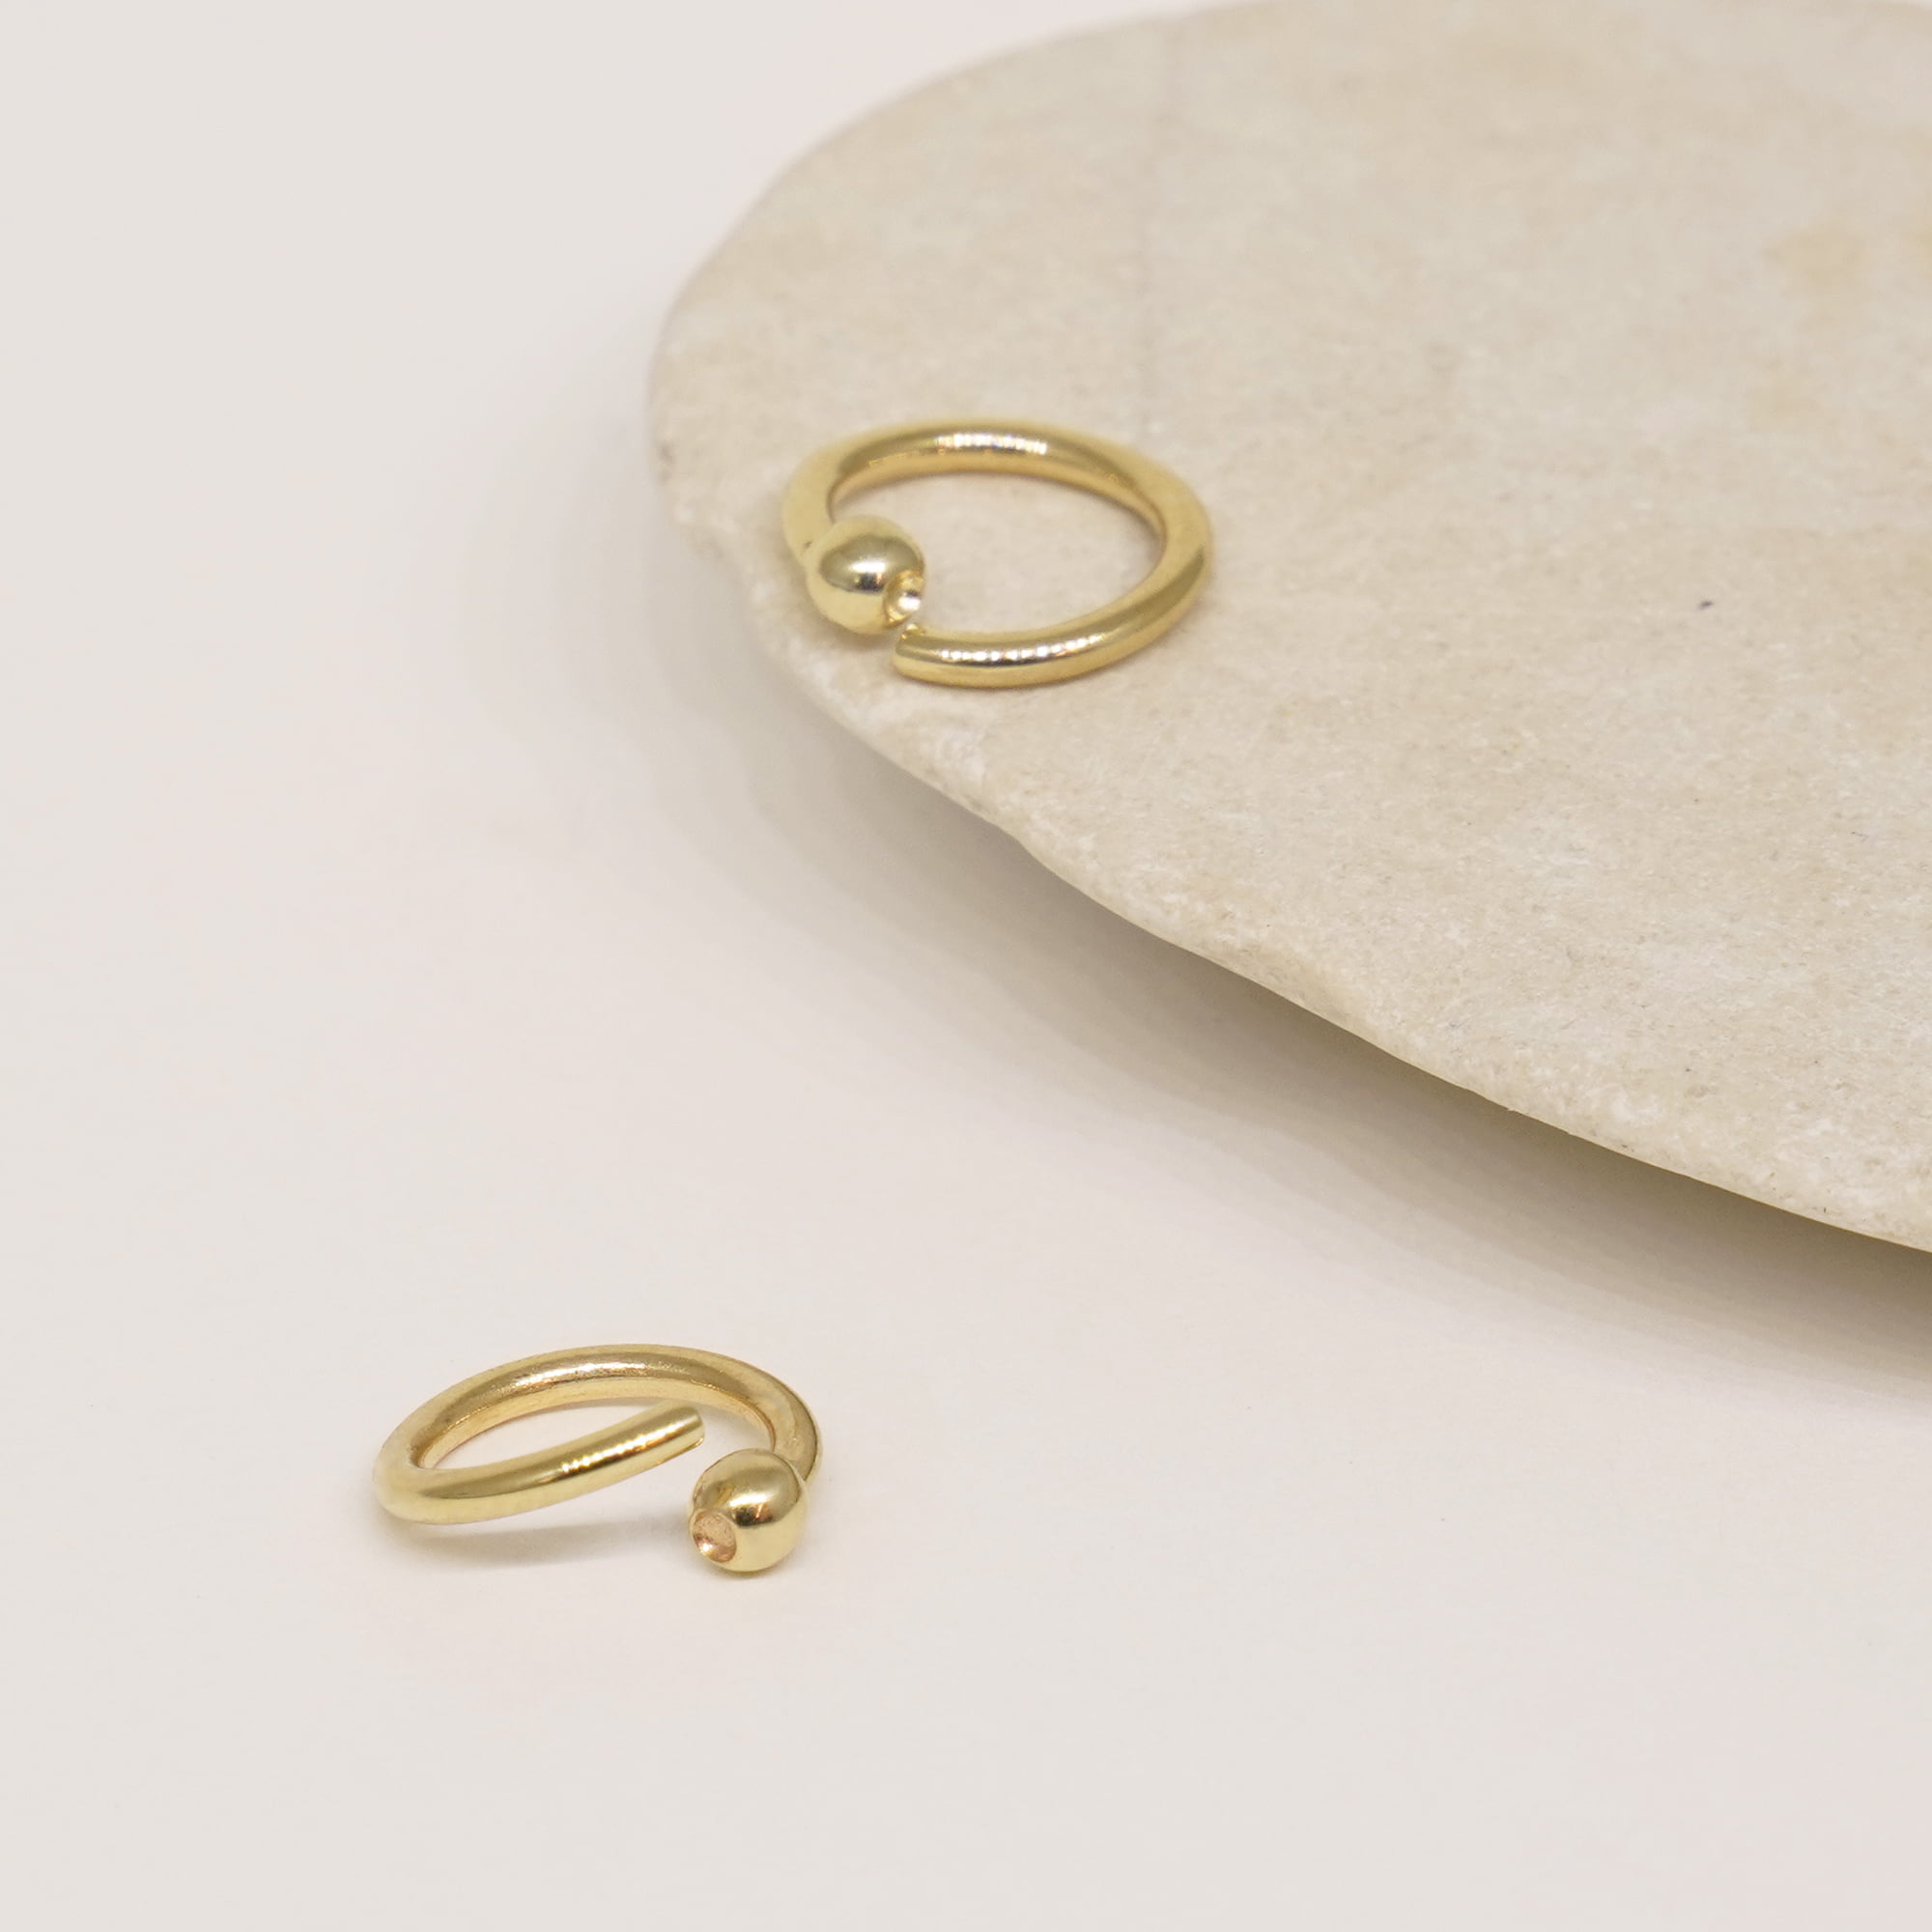 14K REAL Solid Gold CZ Hoop Earring Body Clicker Ring Piercing Jewelry 16 Gauge